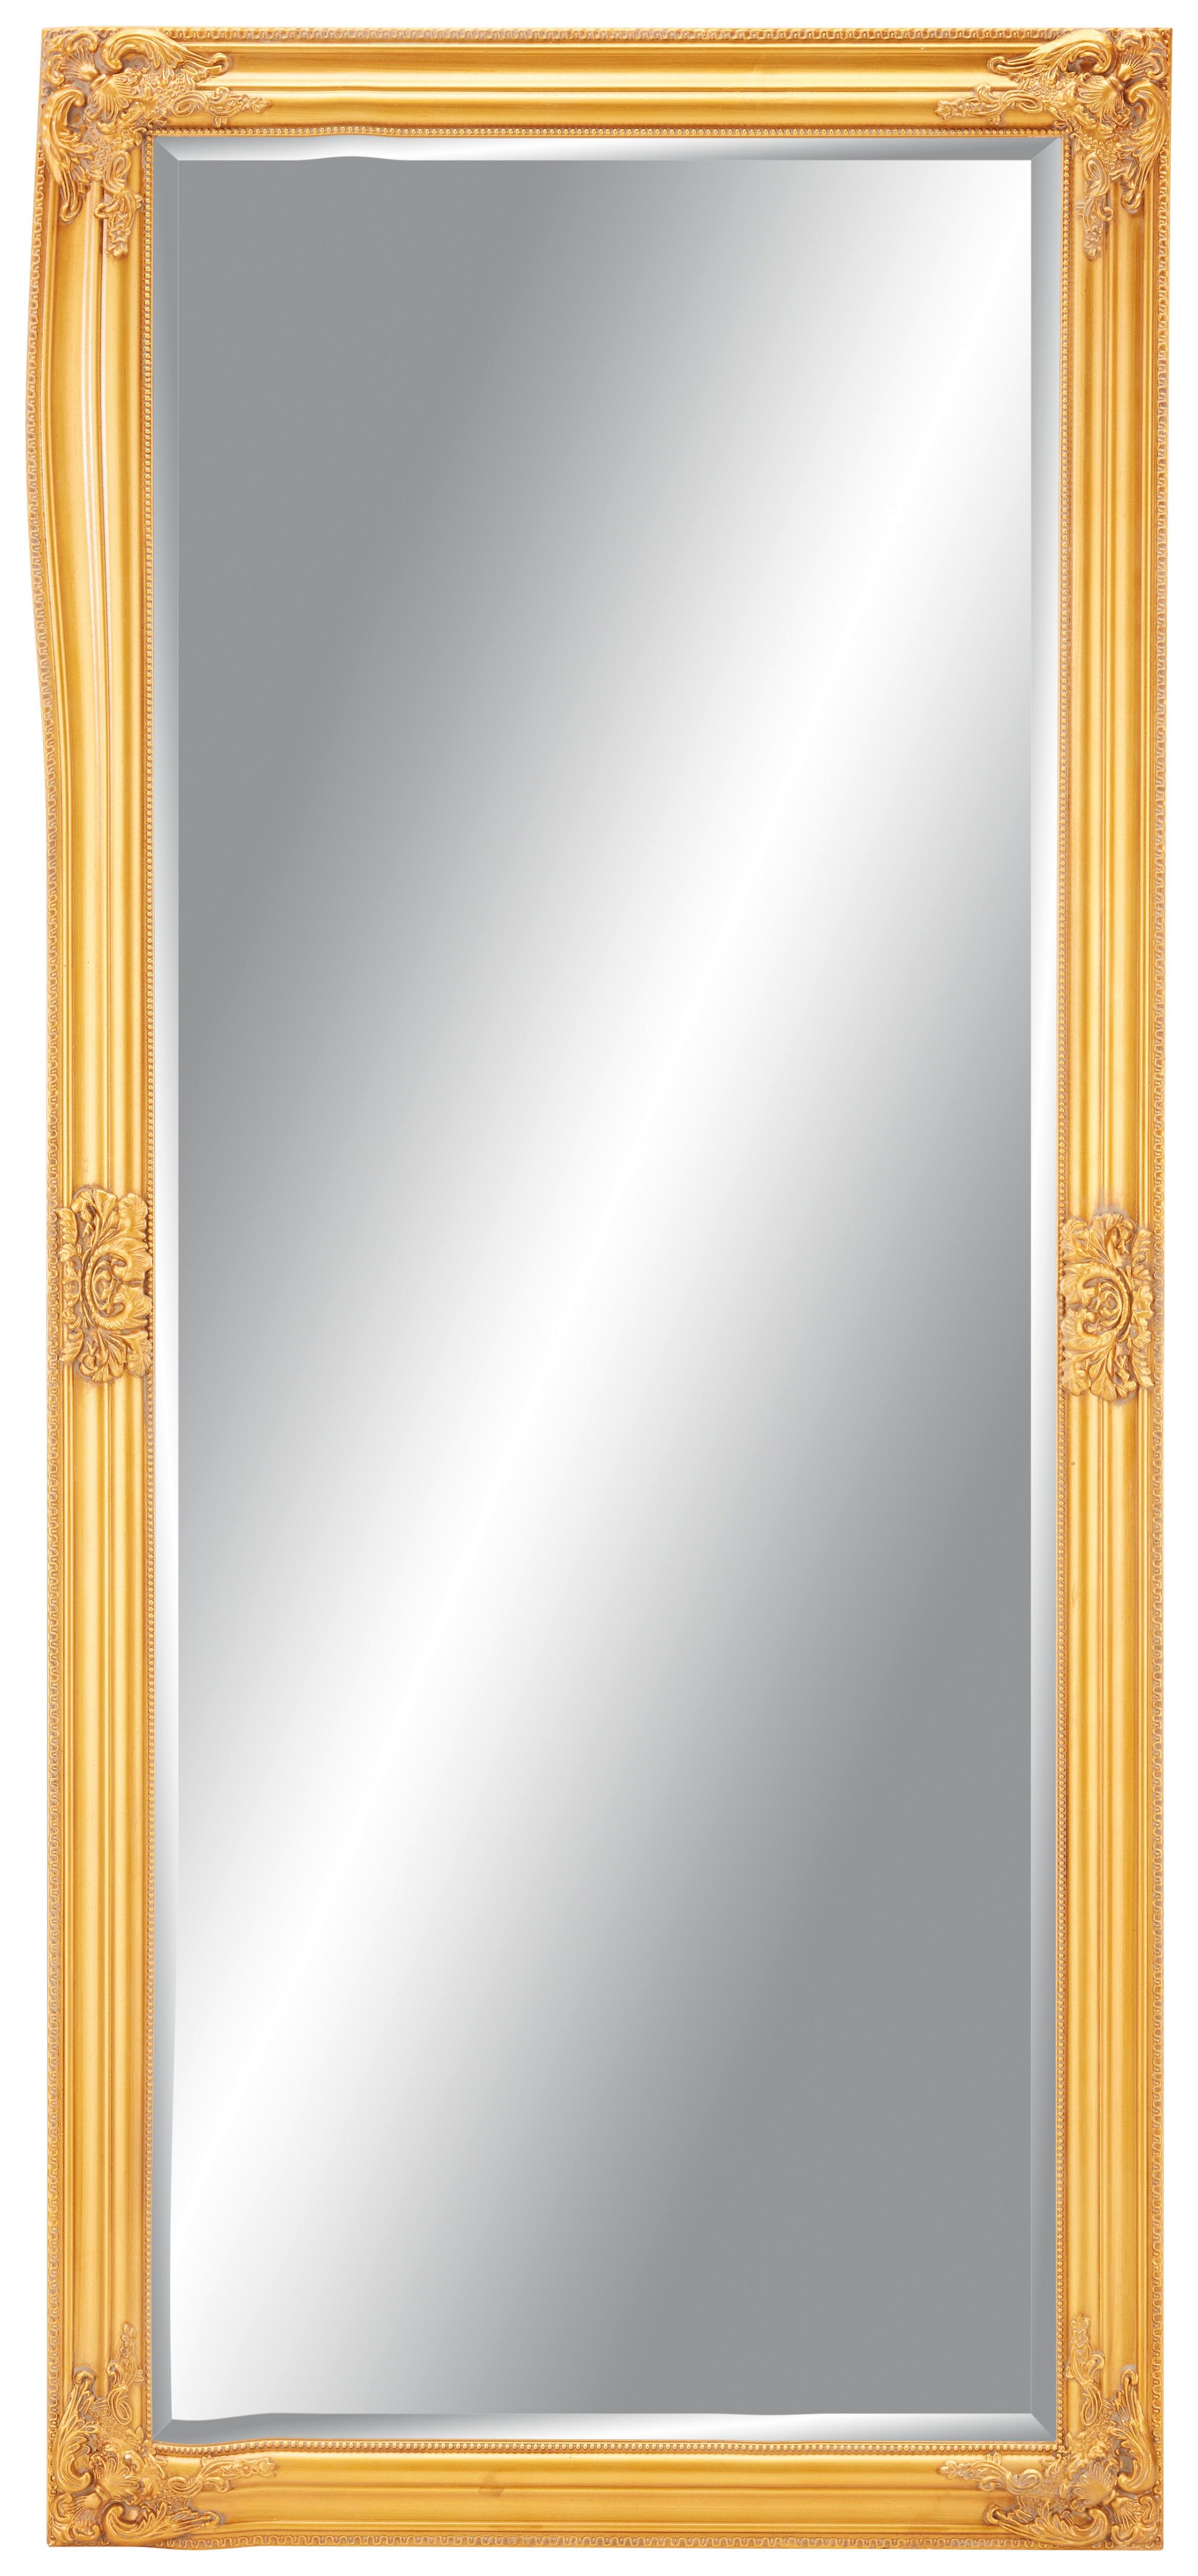 Ogledalo Zidno Barock - srebrne boje/zlatne boje, Romantik / Landhaus, staklo/drvo (72/162/3cm) - Modern Living